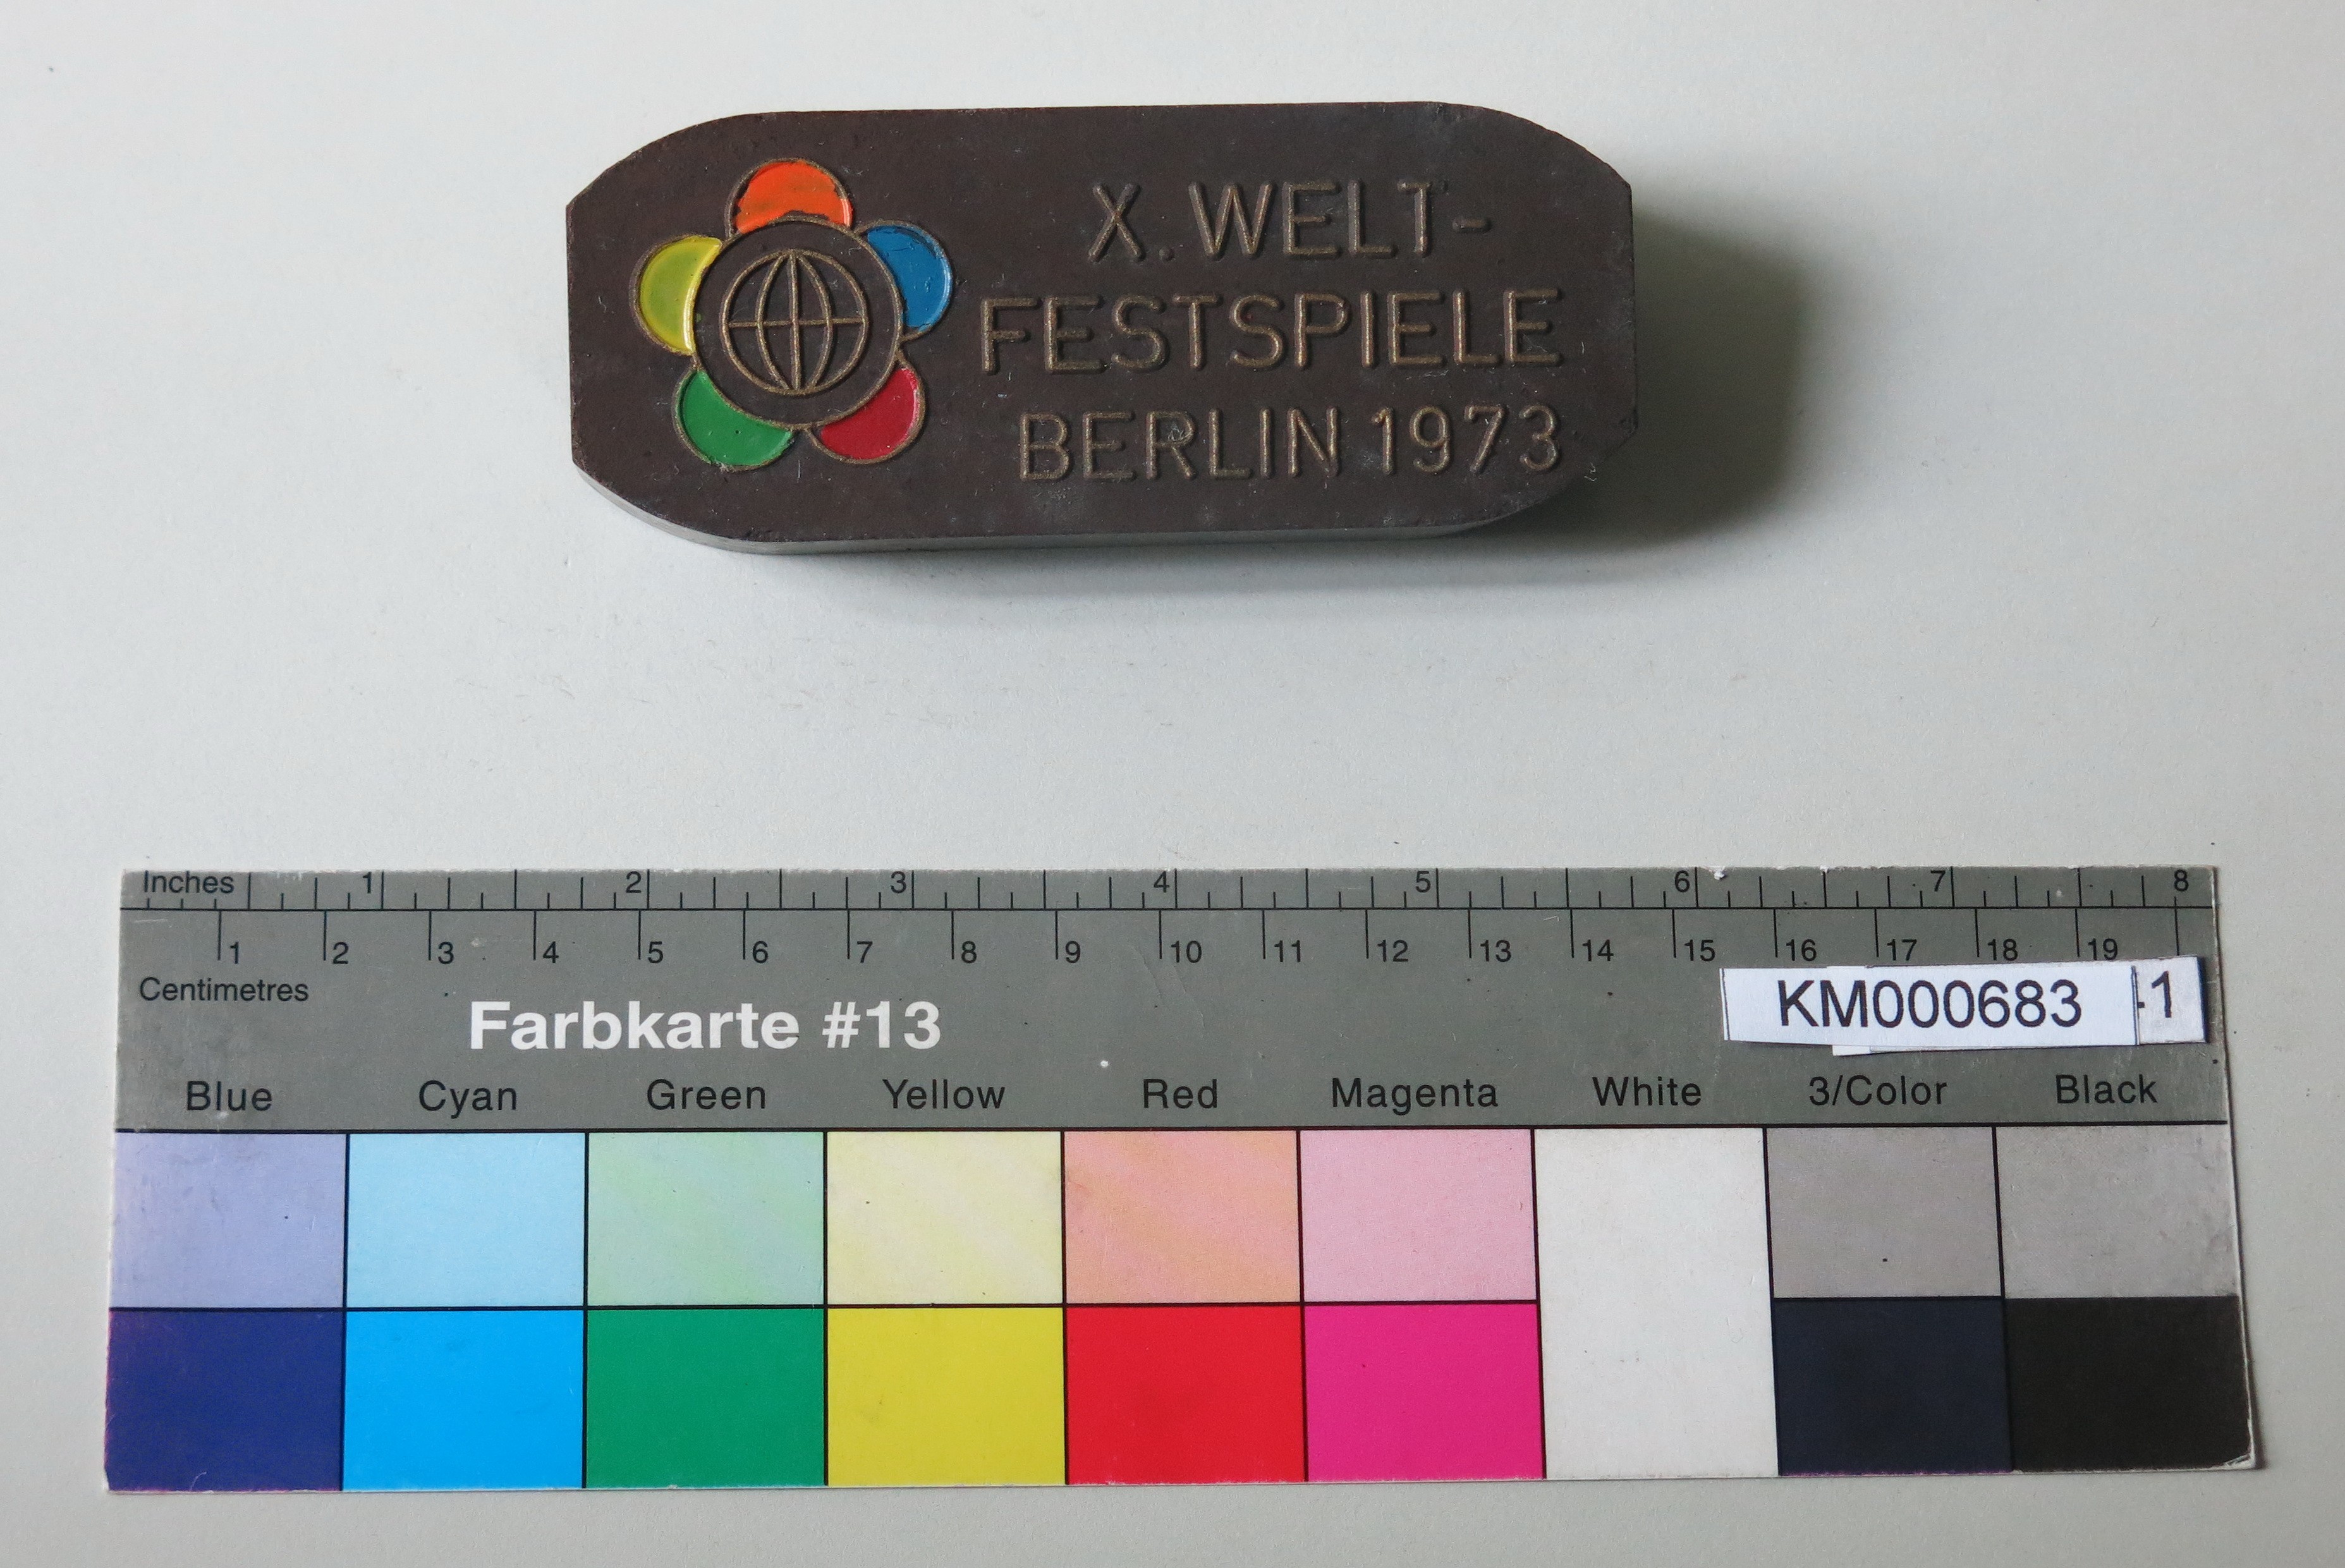 Zierbrikett "X. WELTFESTSPIELE BERLIN 1973" (Energiefabrik Knappenrode CC BY-SA)